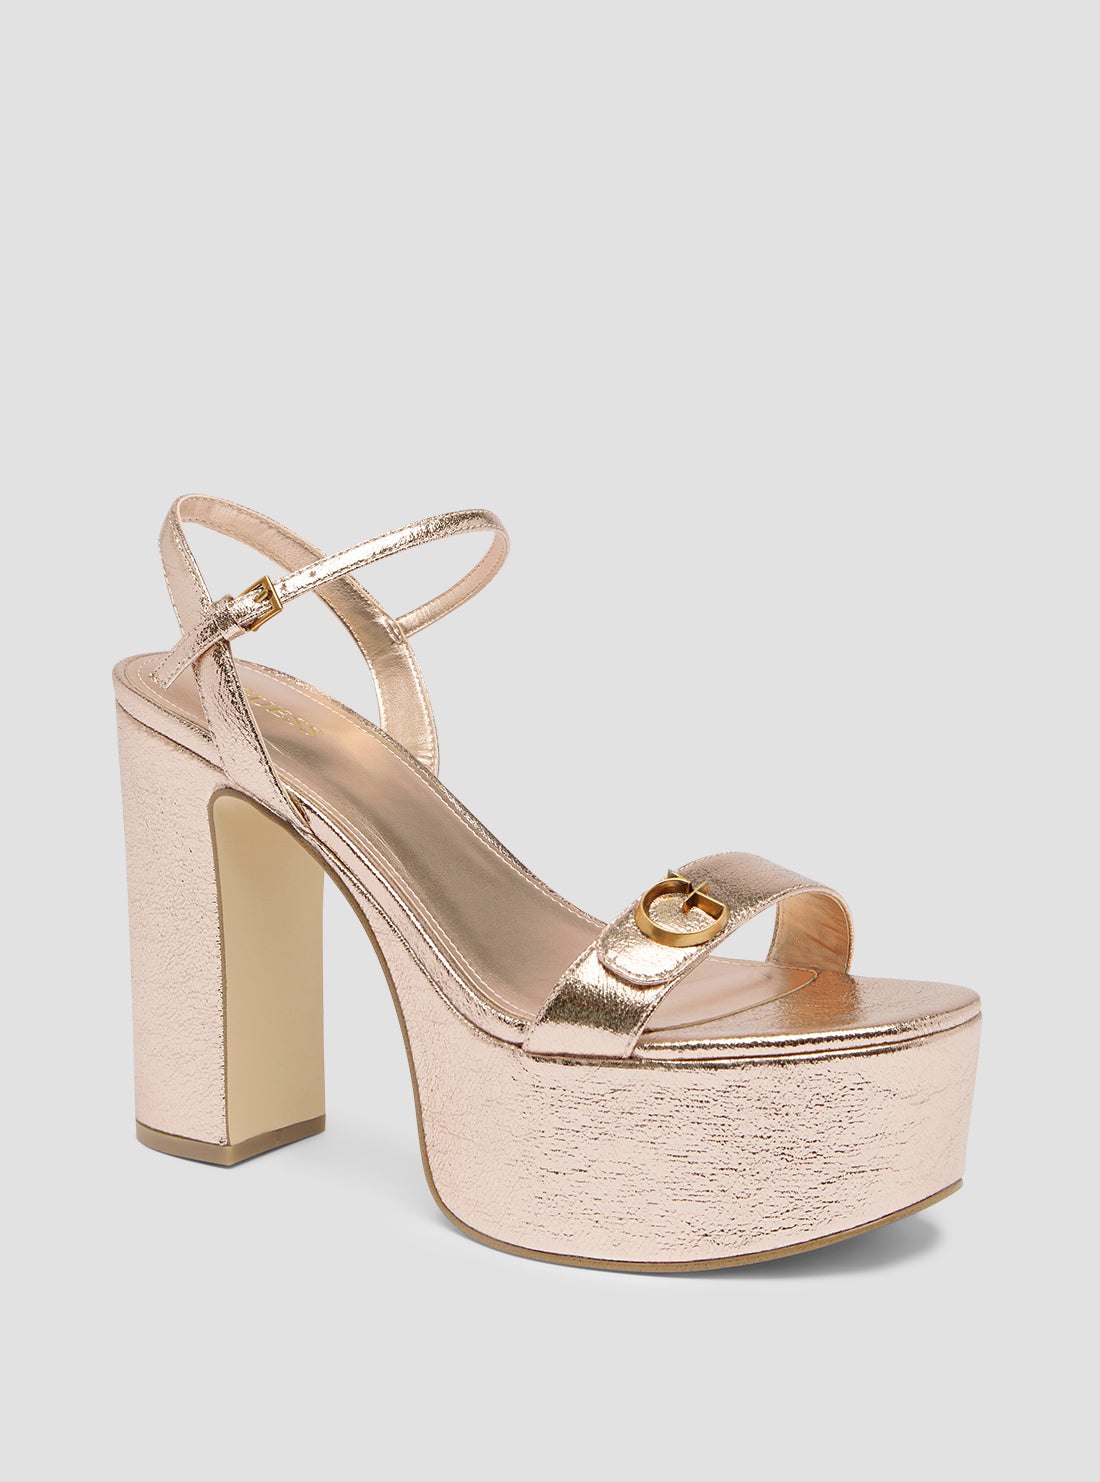 Gold Sherrill Platform Sandal Heels | GUESS Women's Shoes | front view